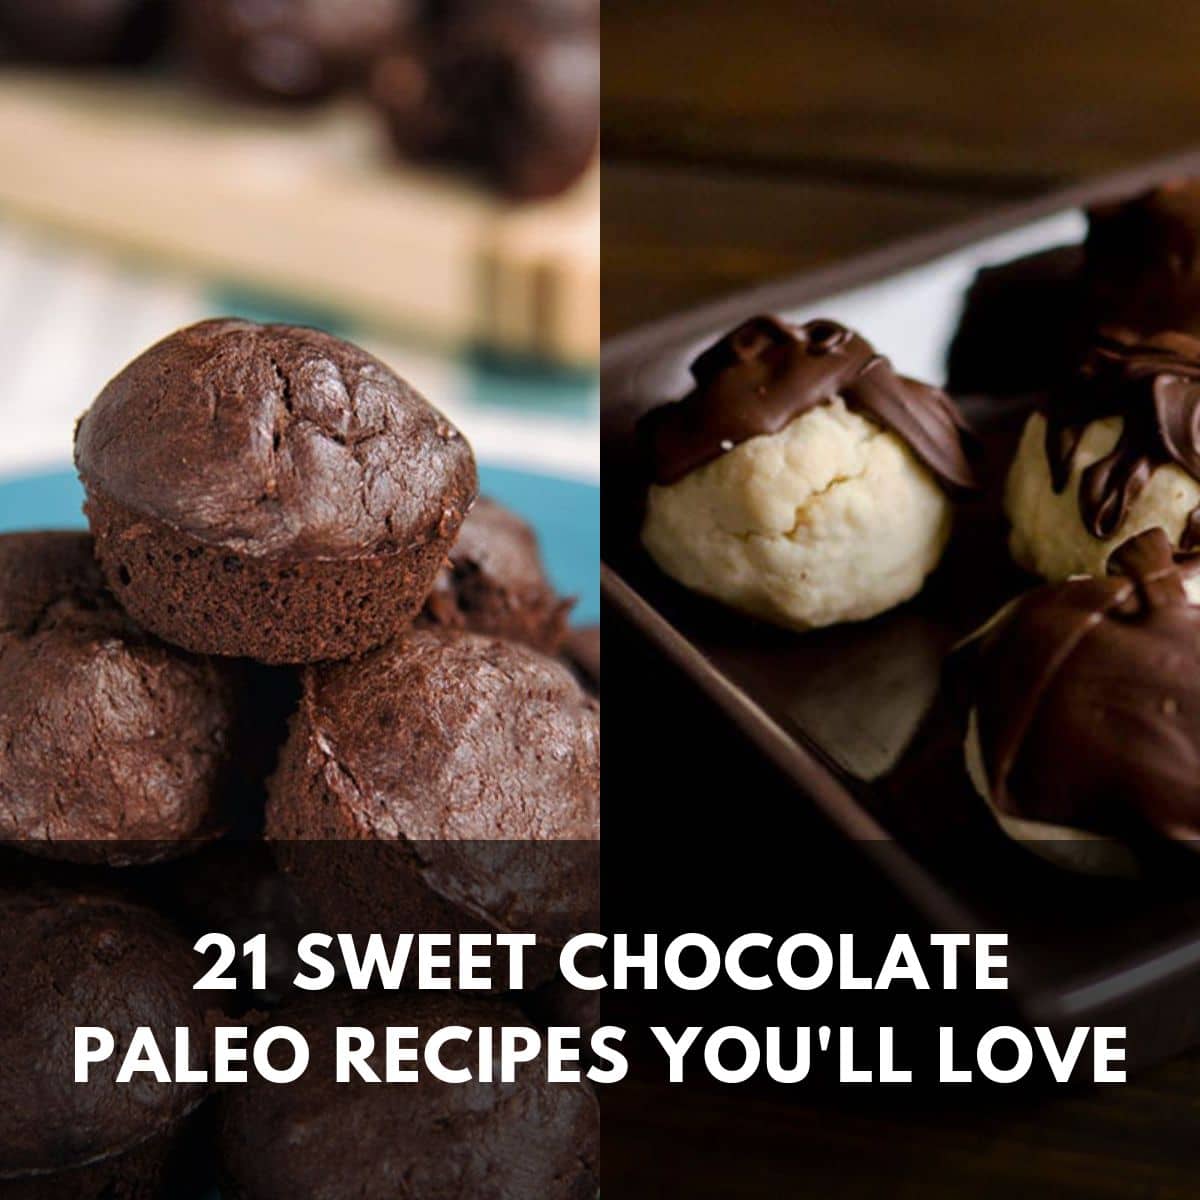 21 sweet chocolate paleo recipes youll love main